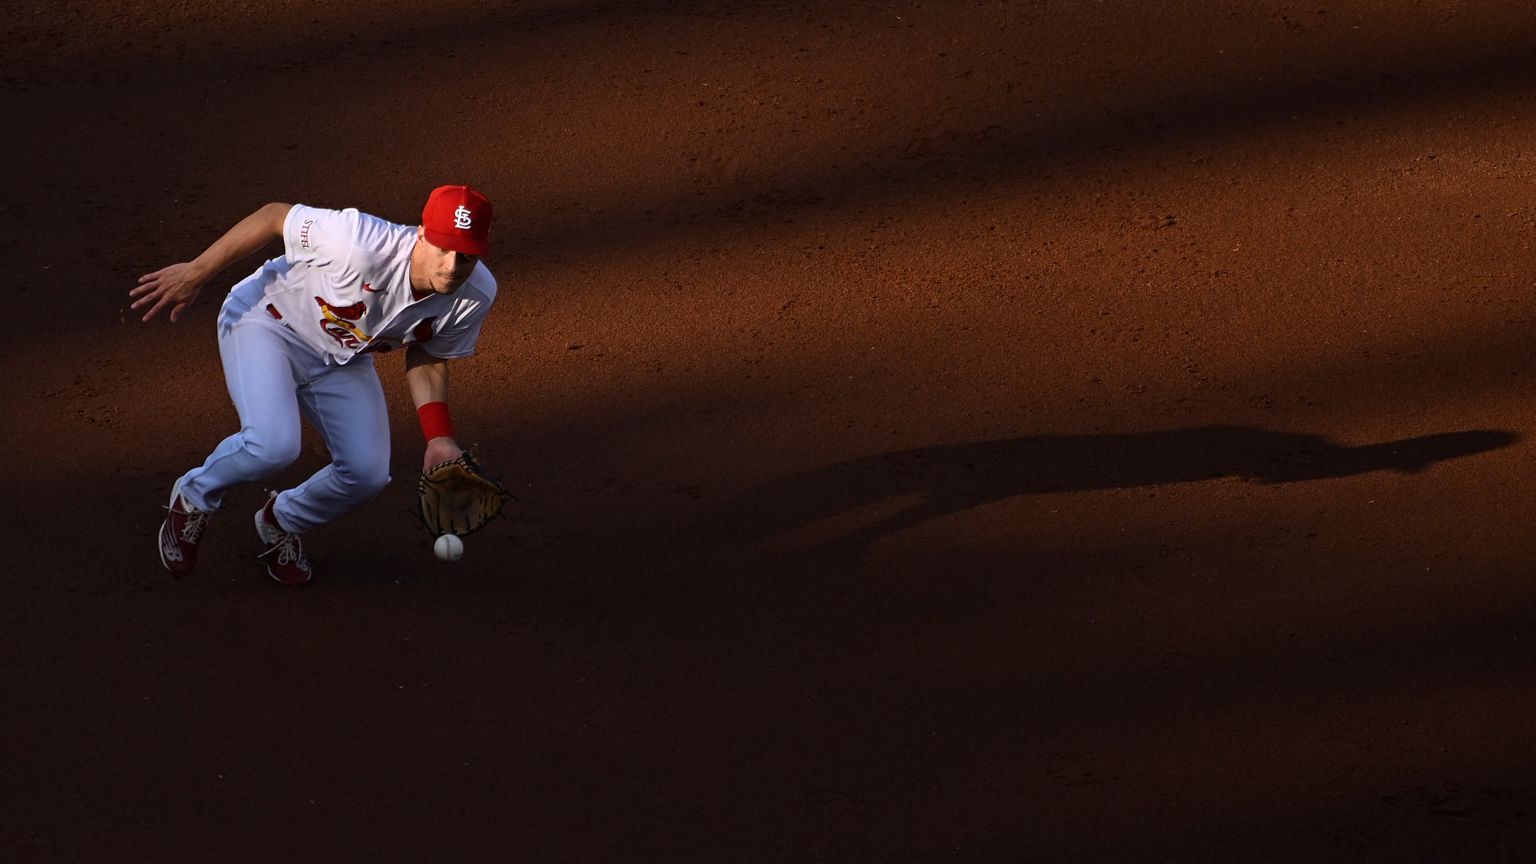 In photos: MLB" Colorado Rockies top St. Louis Cardinals - All Photos  